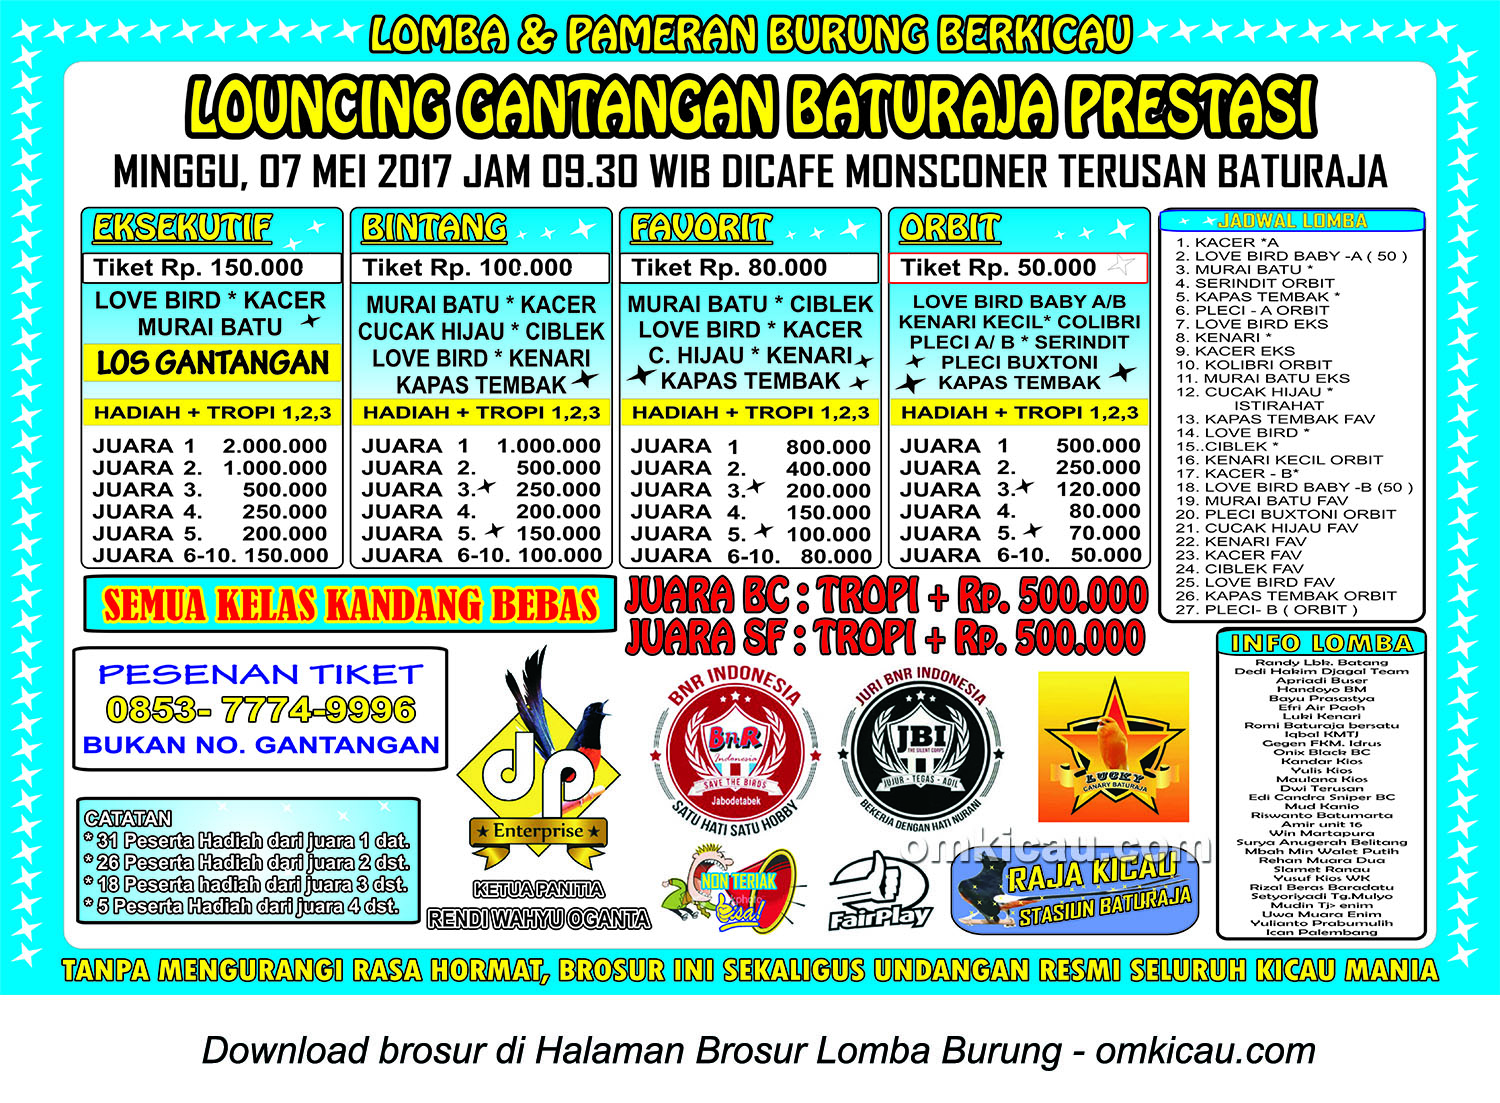 Brosur Lomba Burung Berkicau Launching Gantangan Baturaja Prestasi, Baturaja, 7 Mei 2017